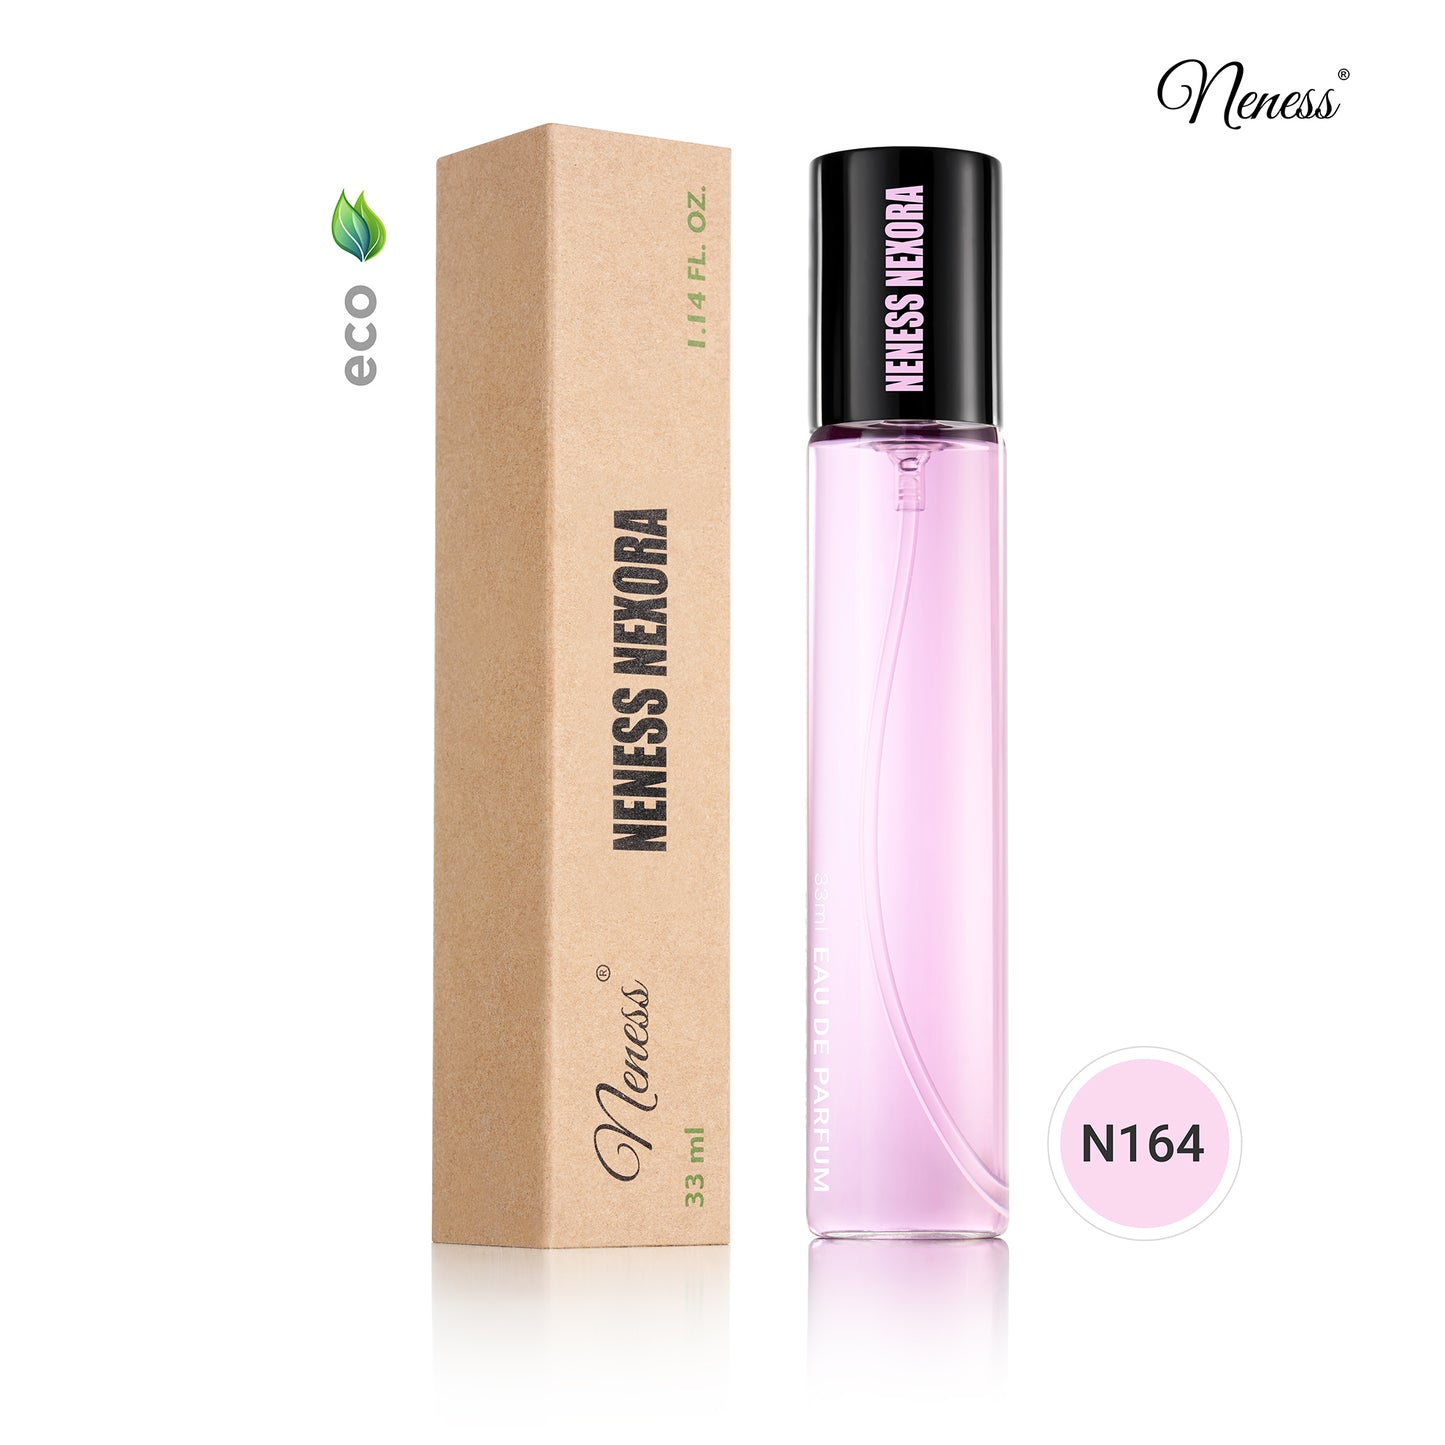 N164. Neness Nexora - 33 ml - Perfume For Women